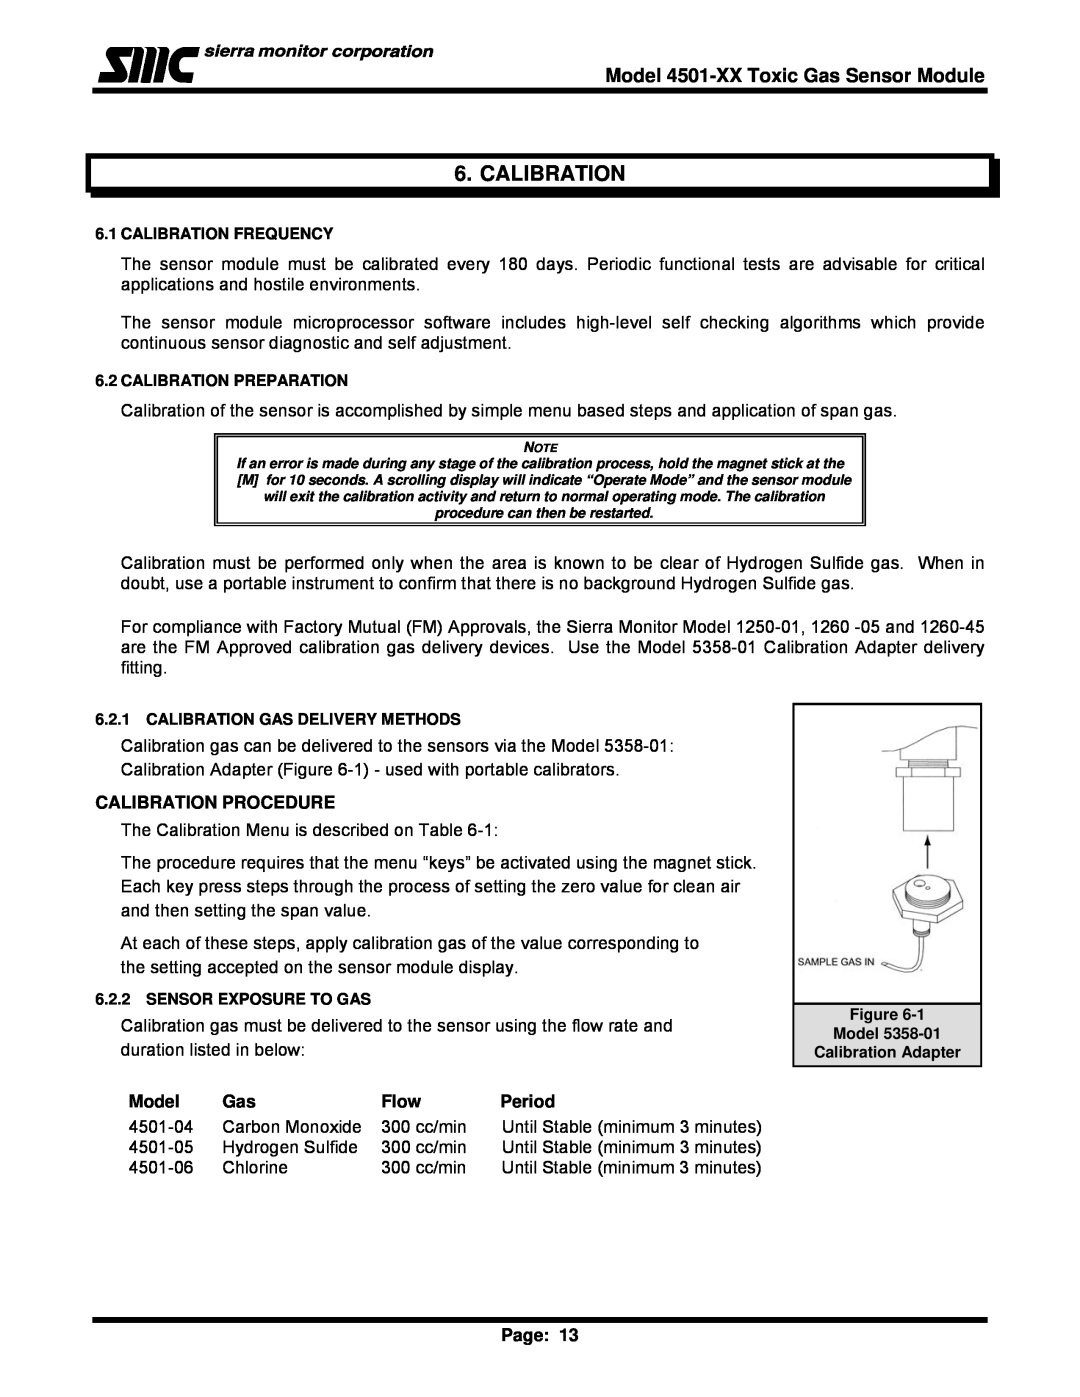 Sierra Monitor Corporation 4501-06 Calibration Procedure, Flow, Period, Model 4501-XXToxic Gas Sensor Module, Page 